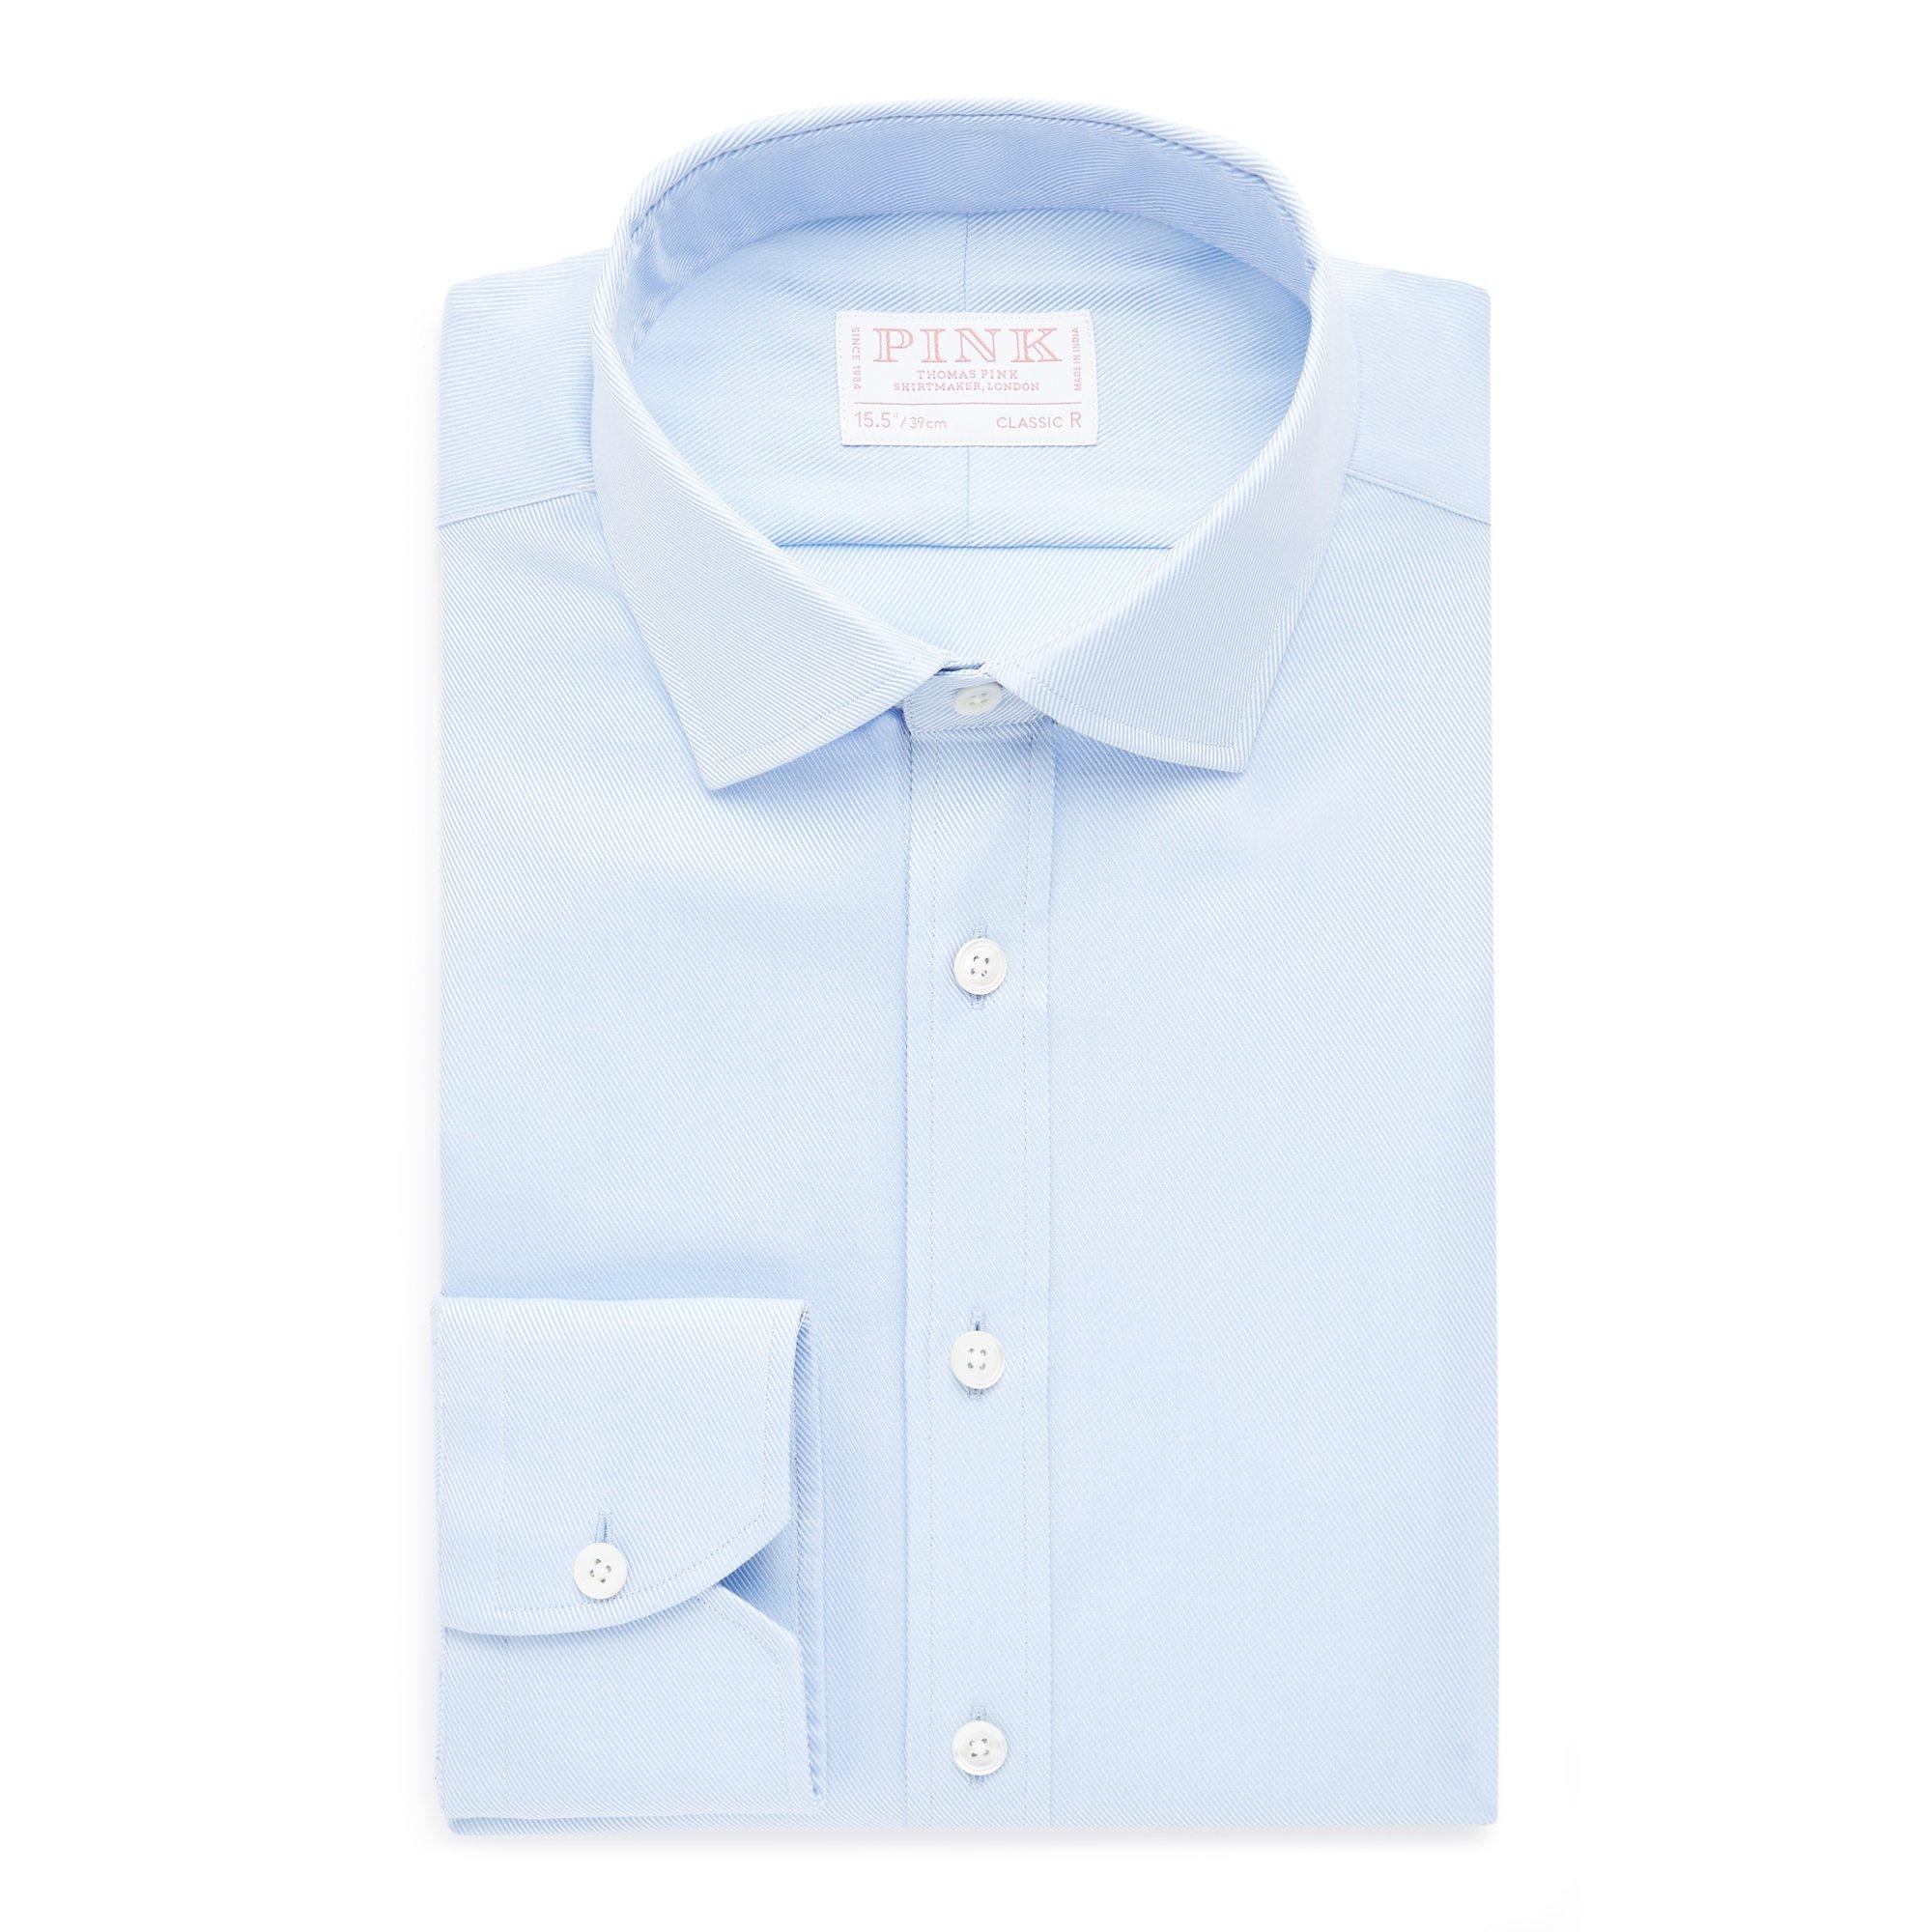 male pattern boldness: Inspecting the Thomas Pink shirt